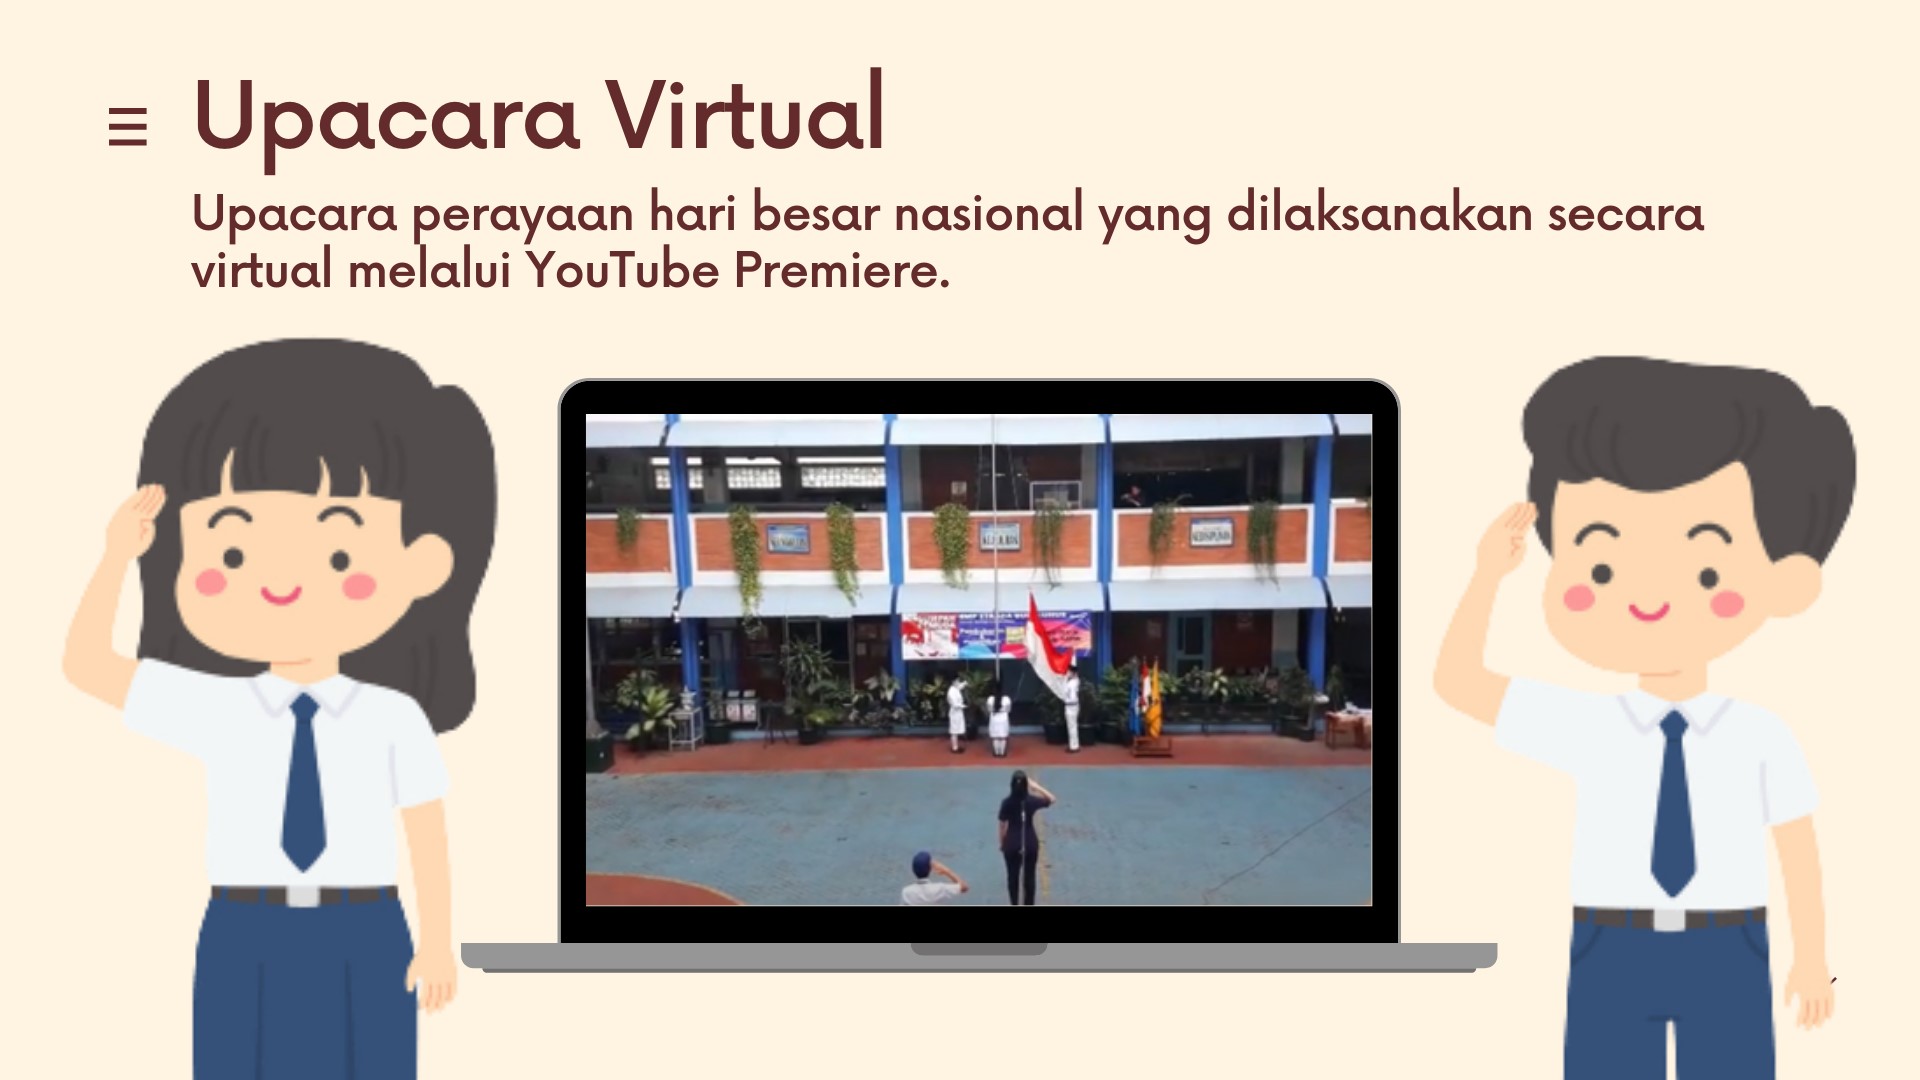 Upacara Virtual